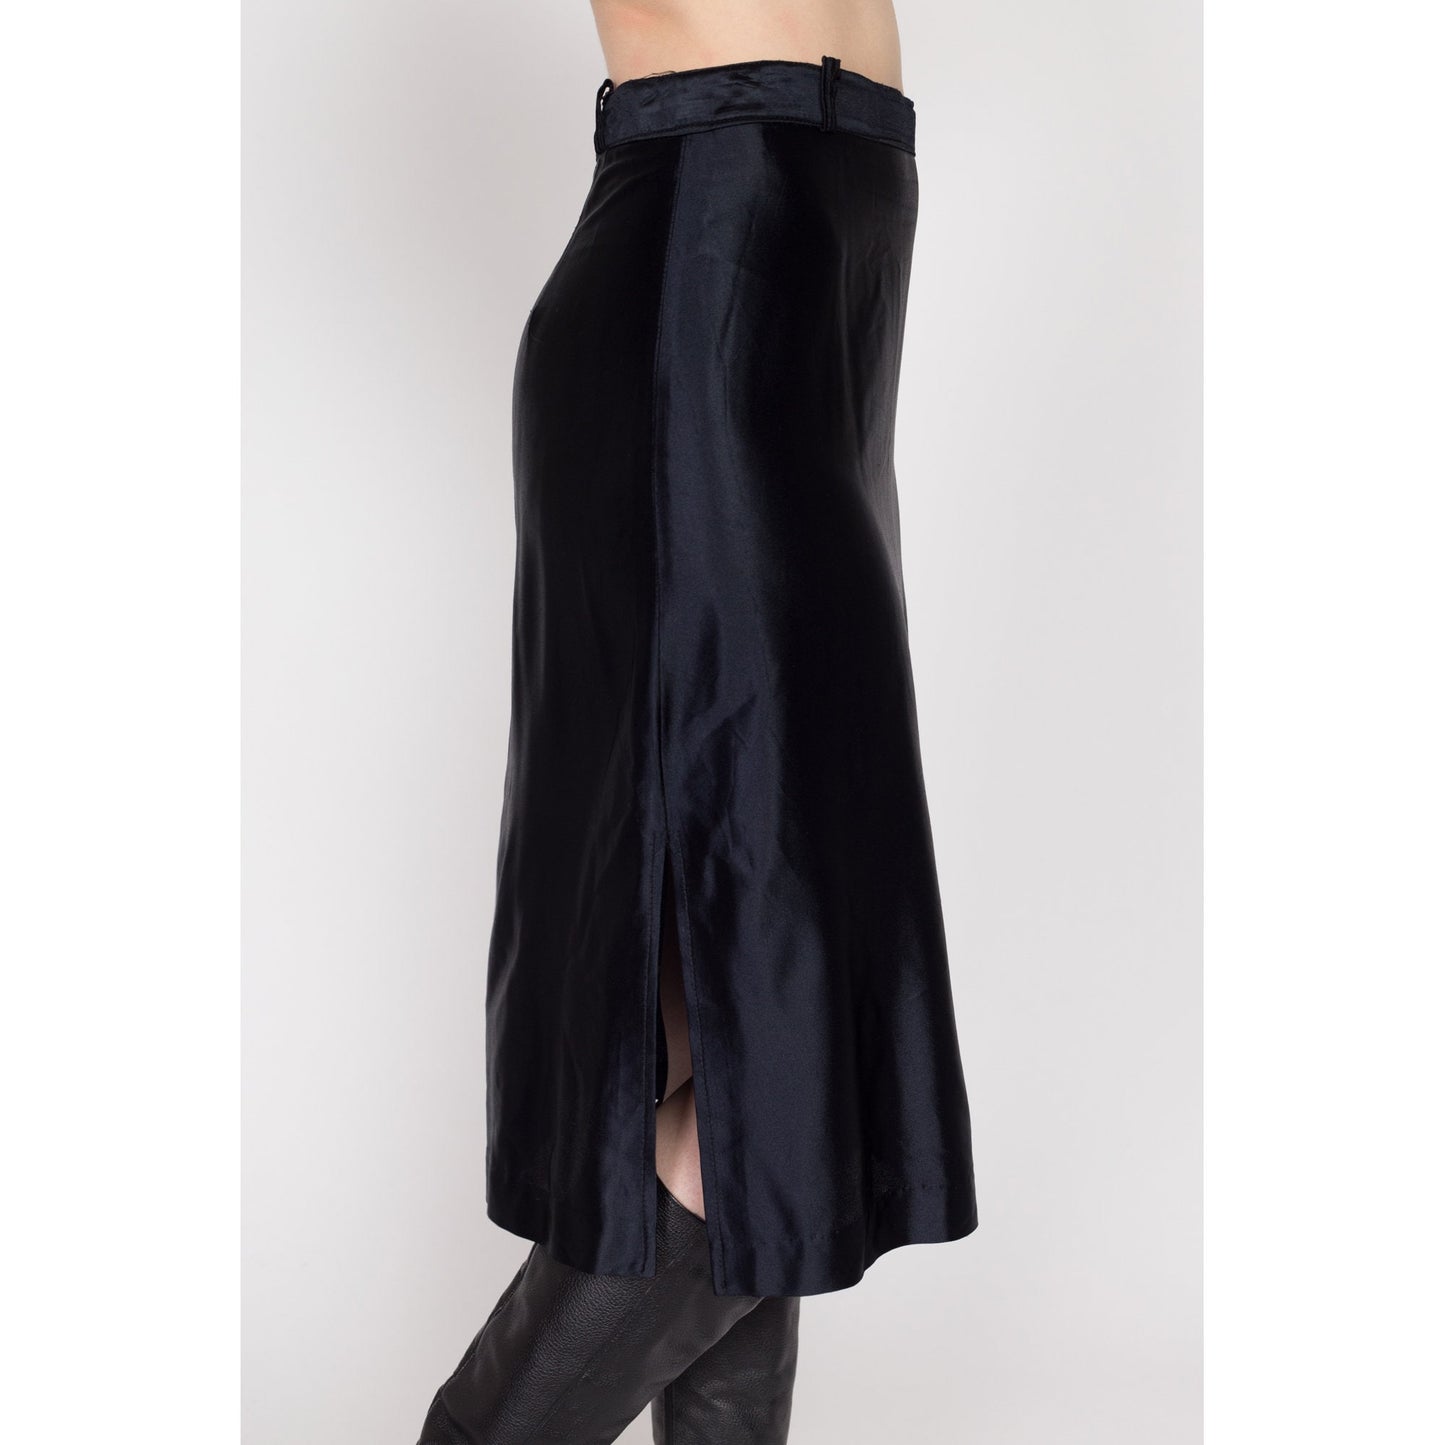 Small 70s Black Satin Side Slit Midi Skirt 26.5" | Vintage Minimalist Shiny High Waisted A Line Skirt